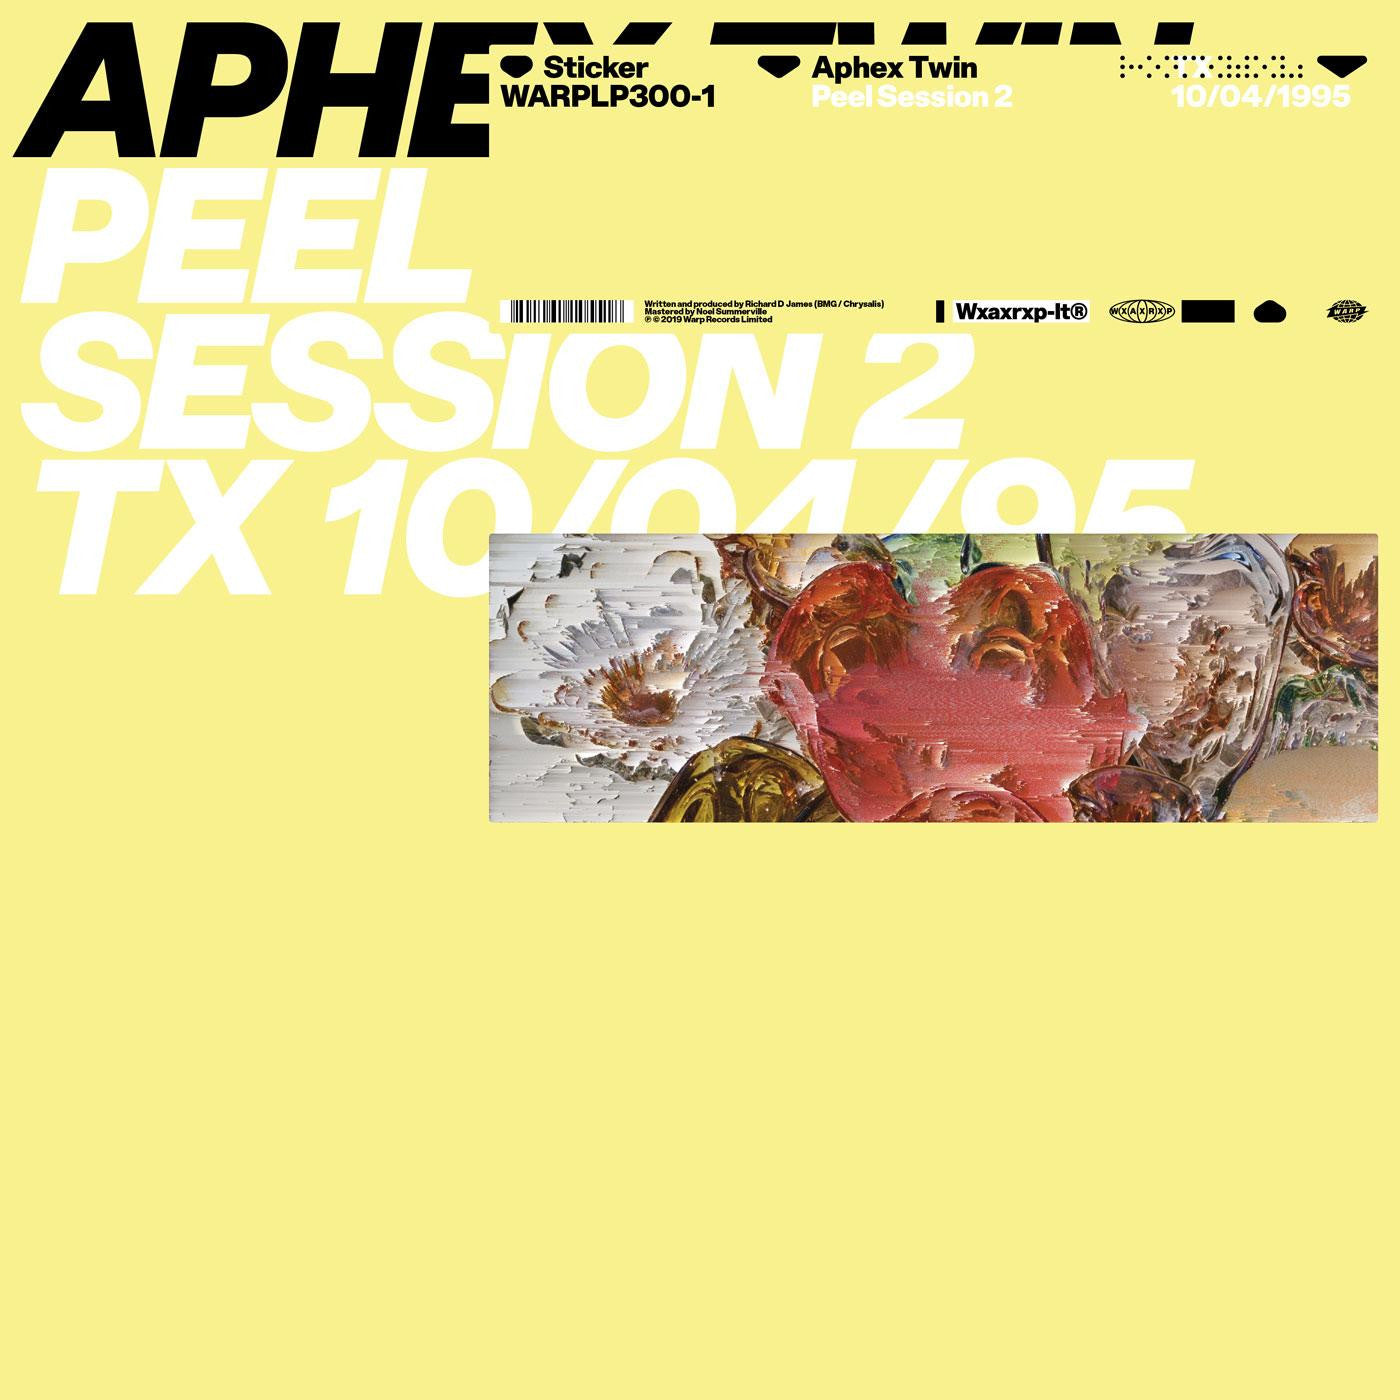 Aphex Twin ''Peel Session 2 TX 10/04/95'' 12" EP